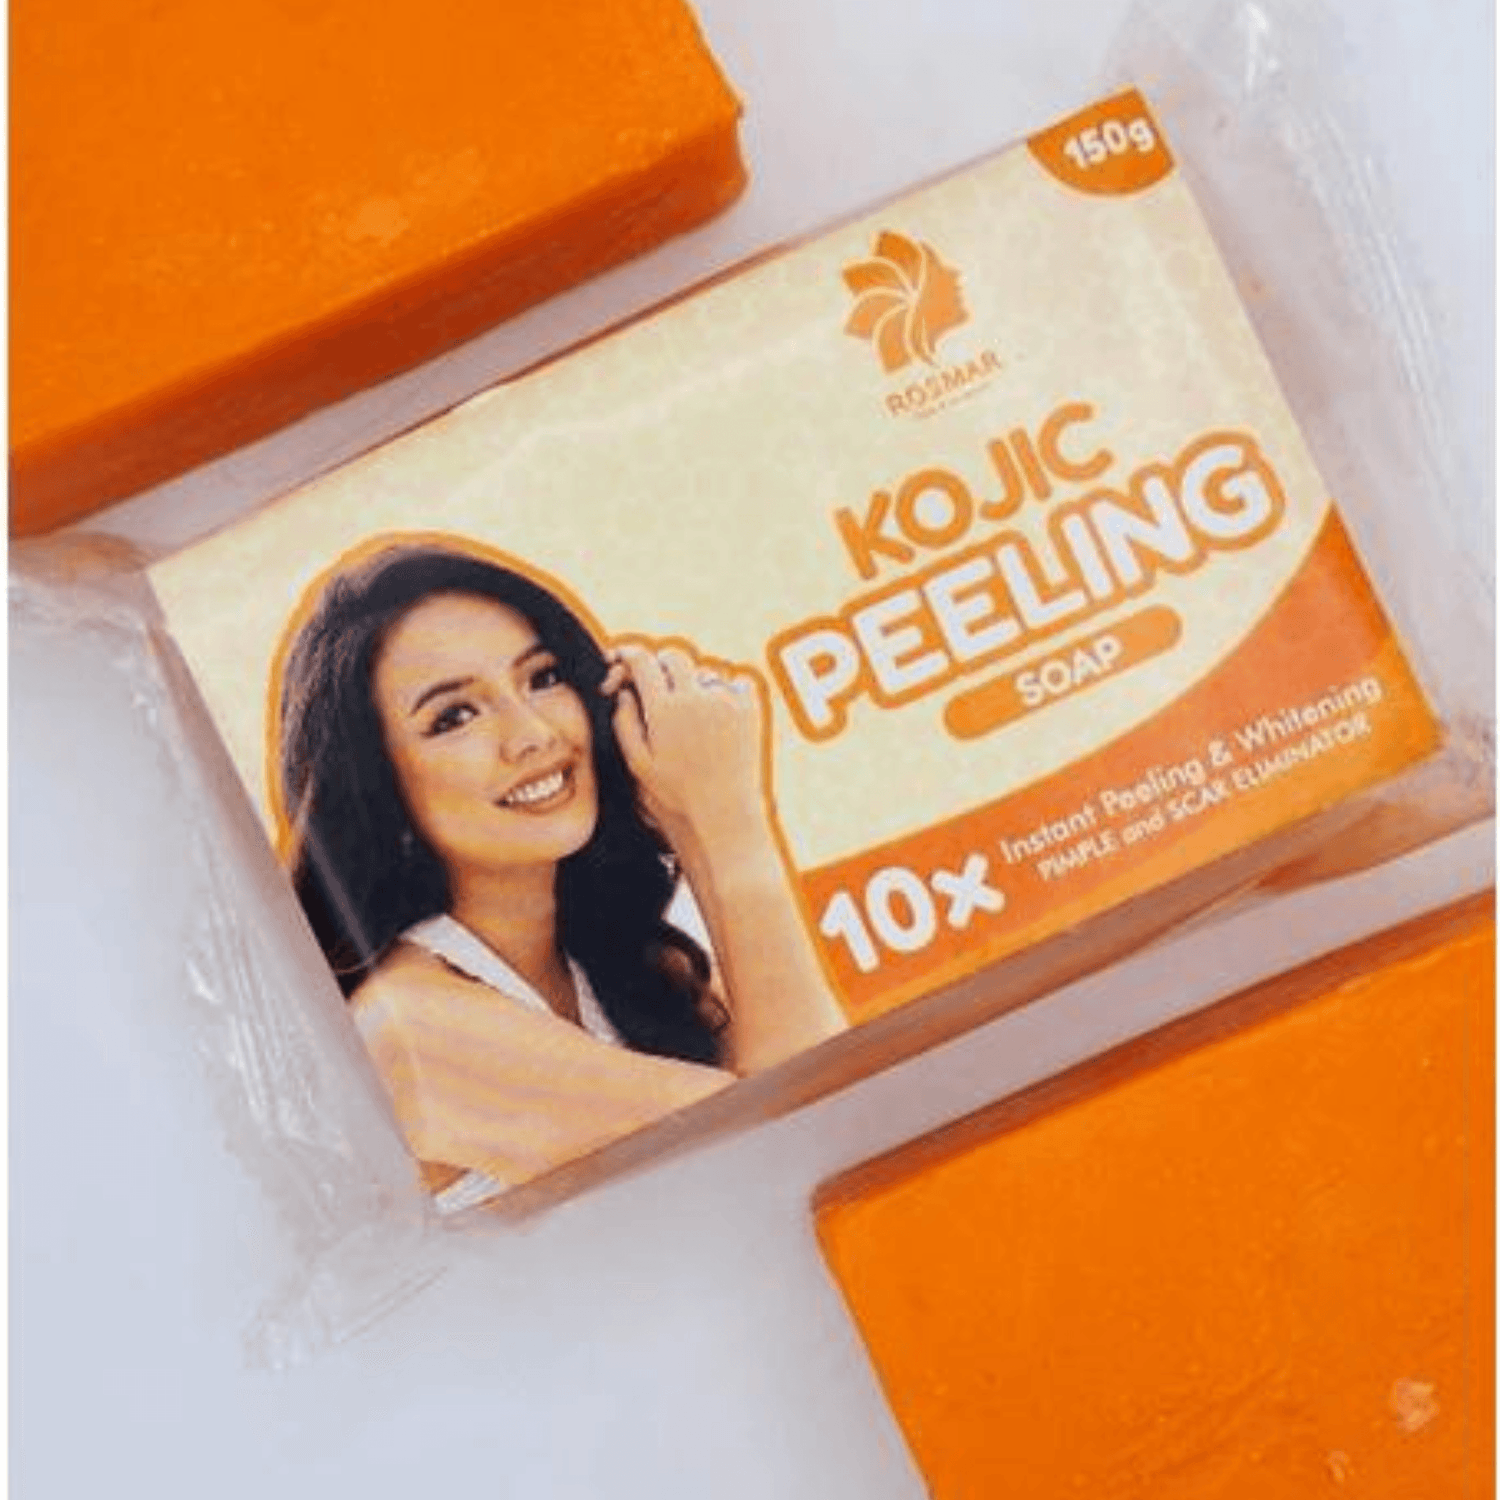 Rosmar Kagayaku Kojic Peeling Soap - True Beauty Skin Essentials